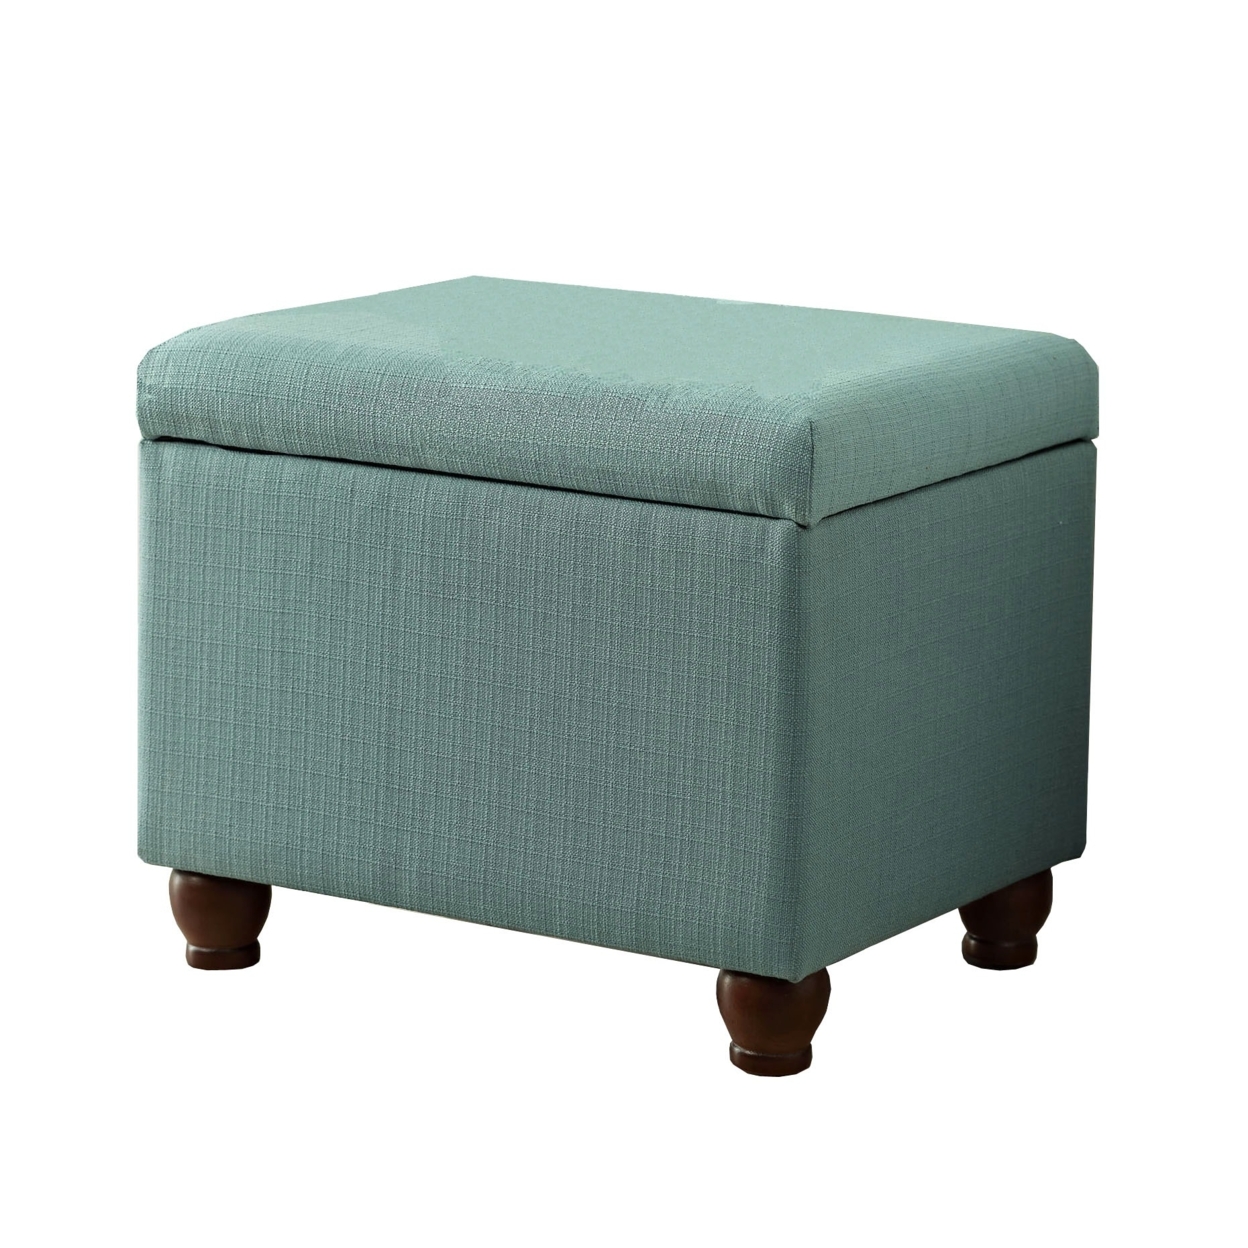 Fabric Upholstered Wooden Storage Bench With Bun Feet, Medium, Aqua Blue And Brown- Saltoro Sherpi